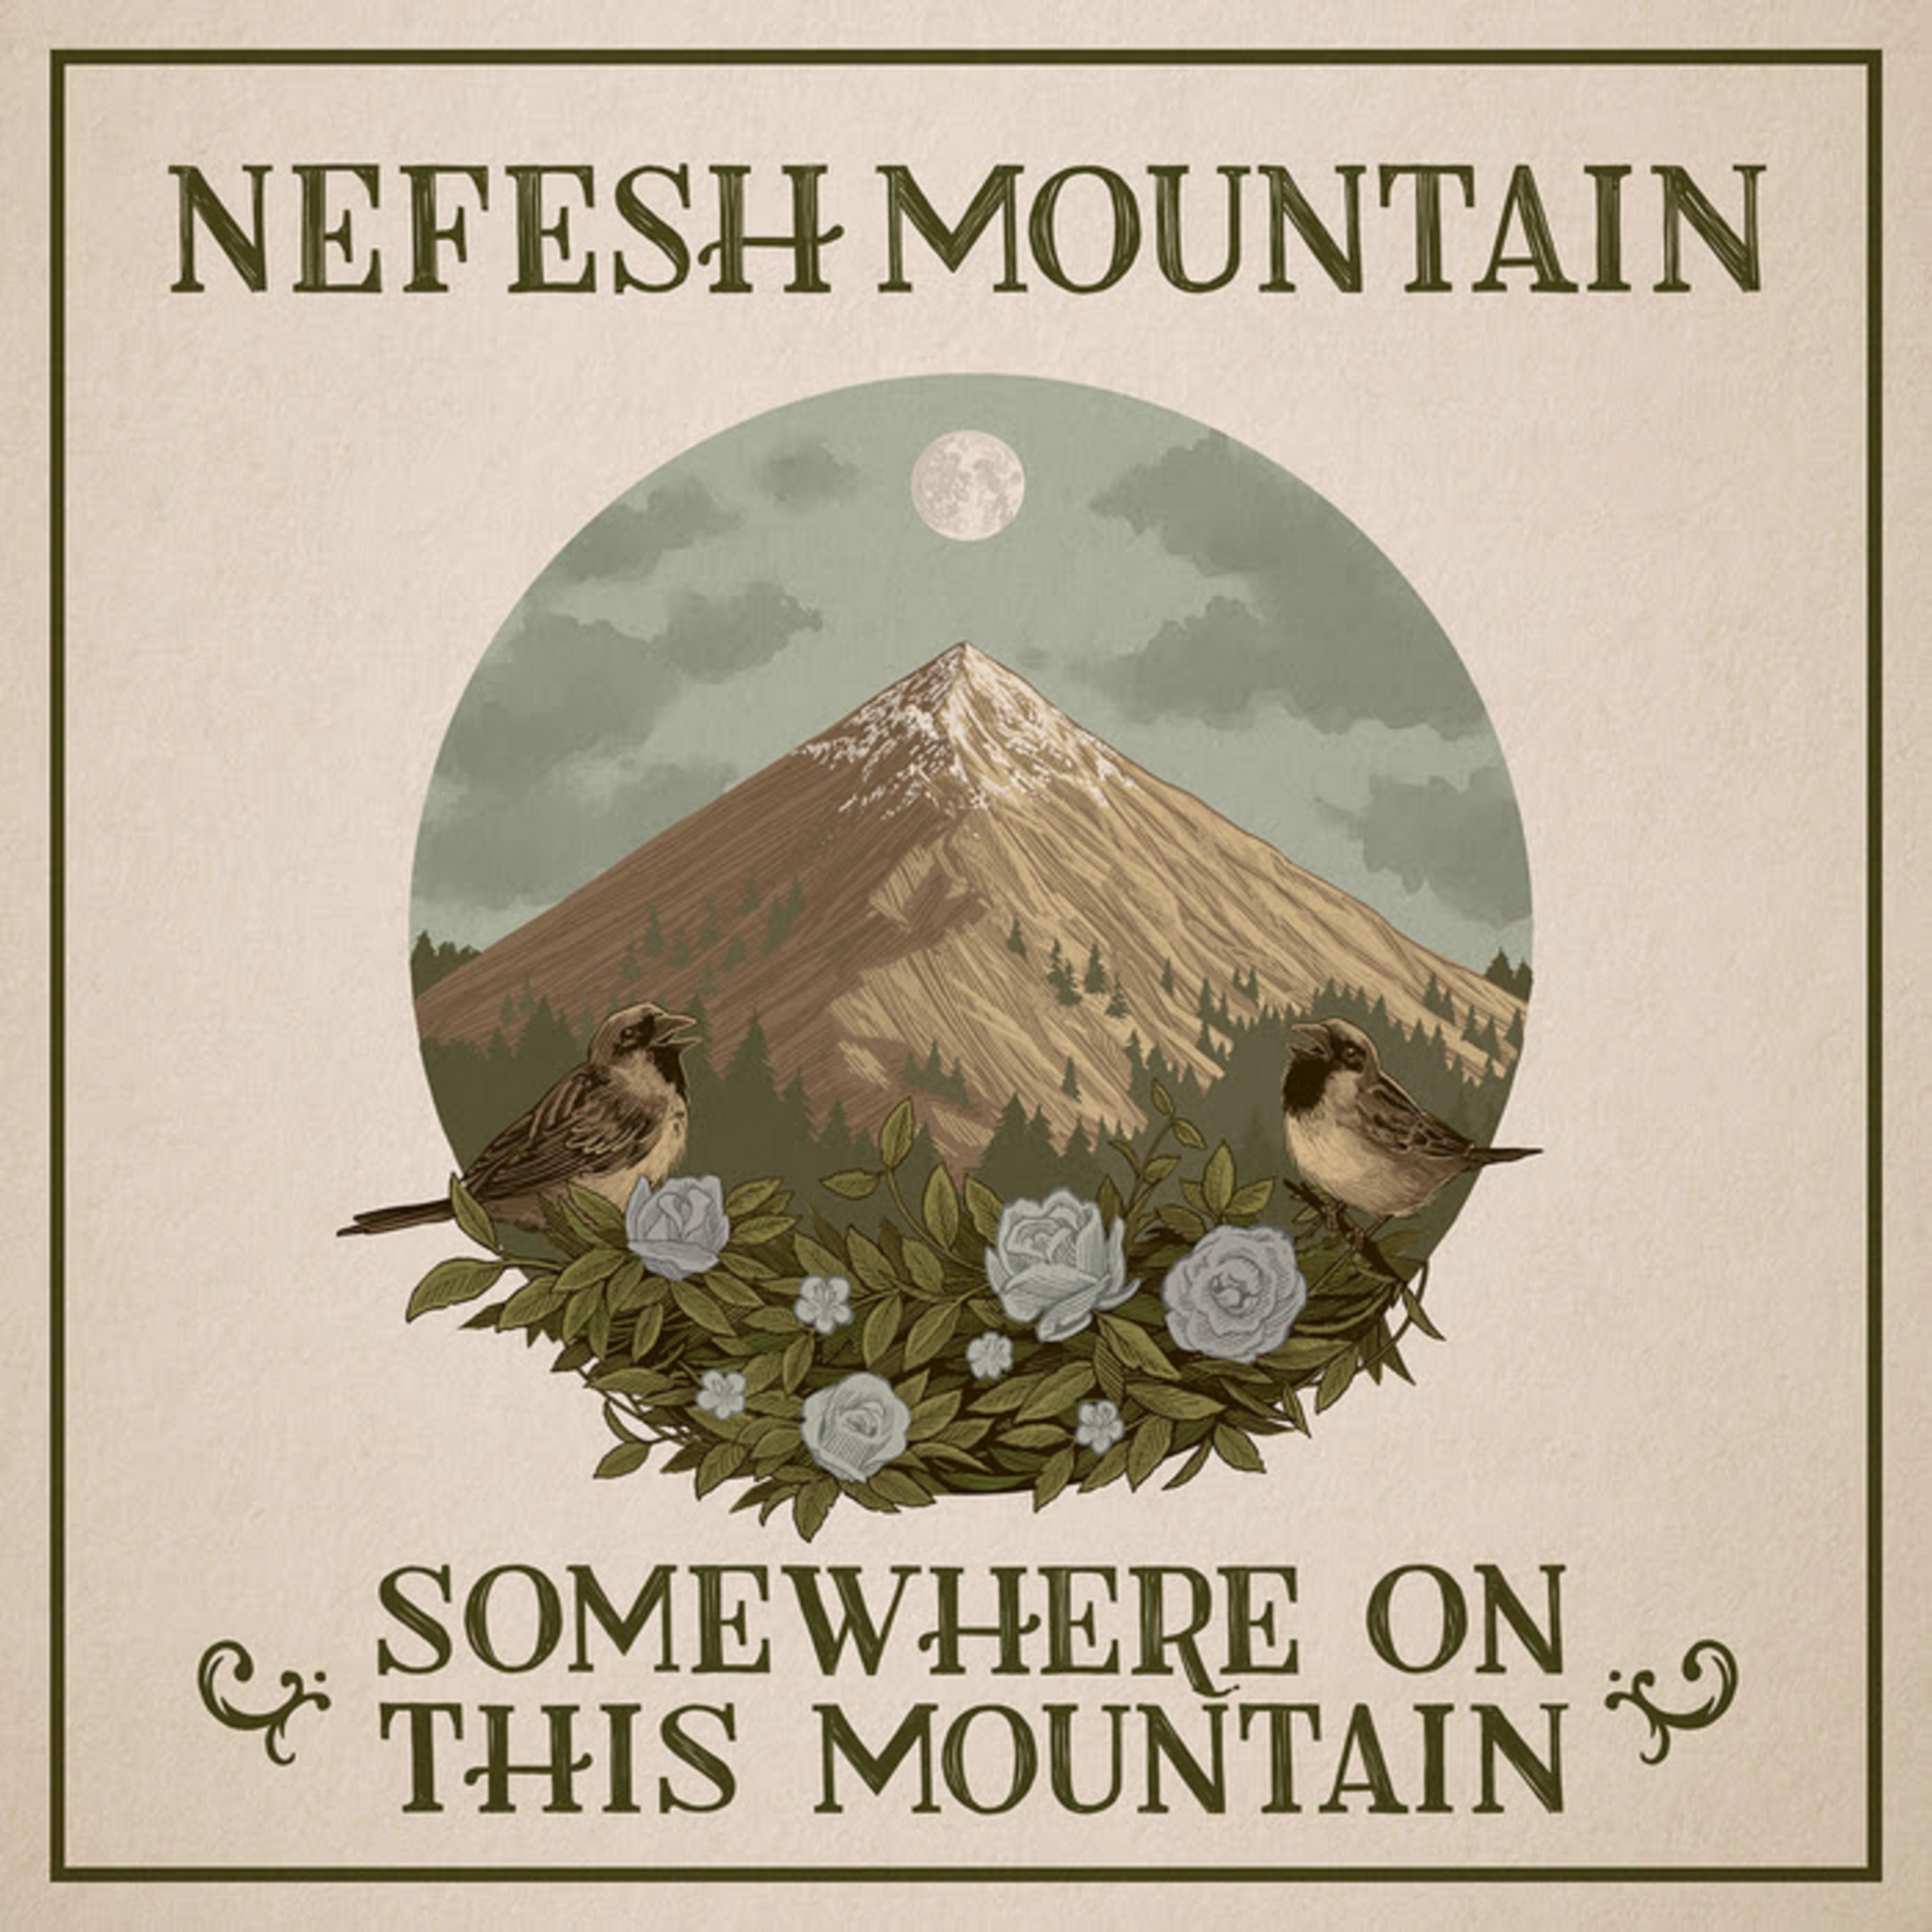 Nefesh Mountain Releases “Somewhere On This Mountain” Featuring Jerry Douglas